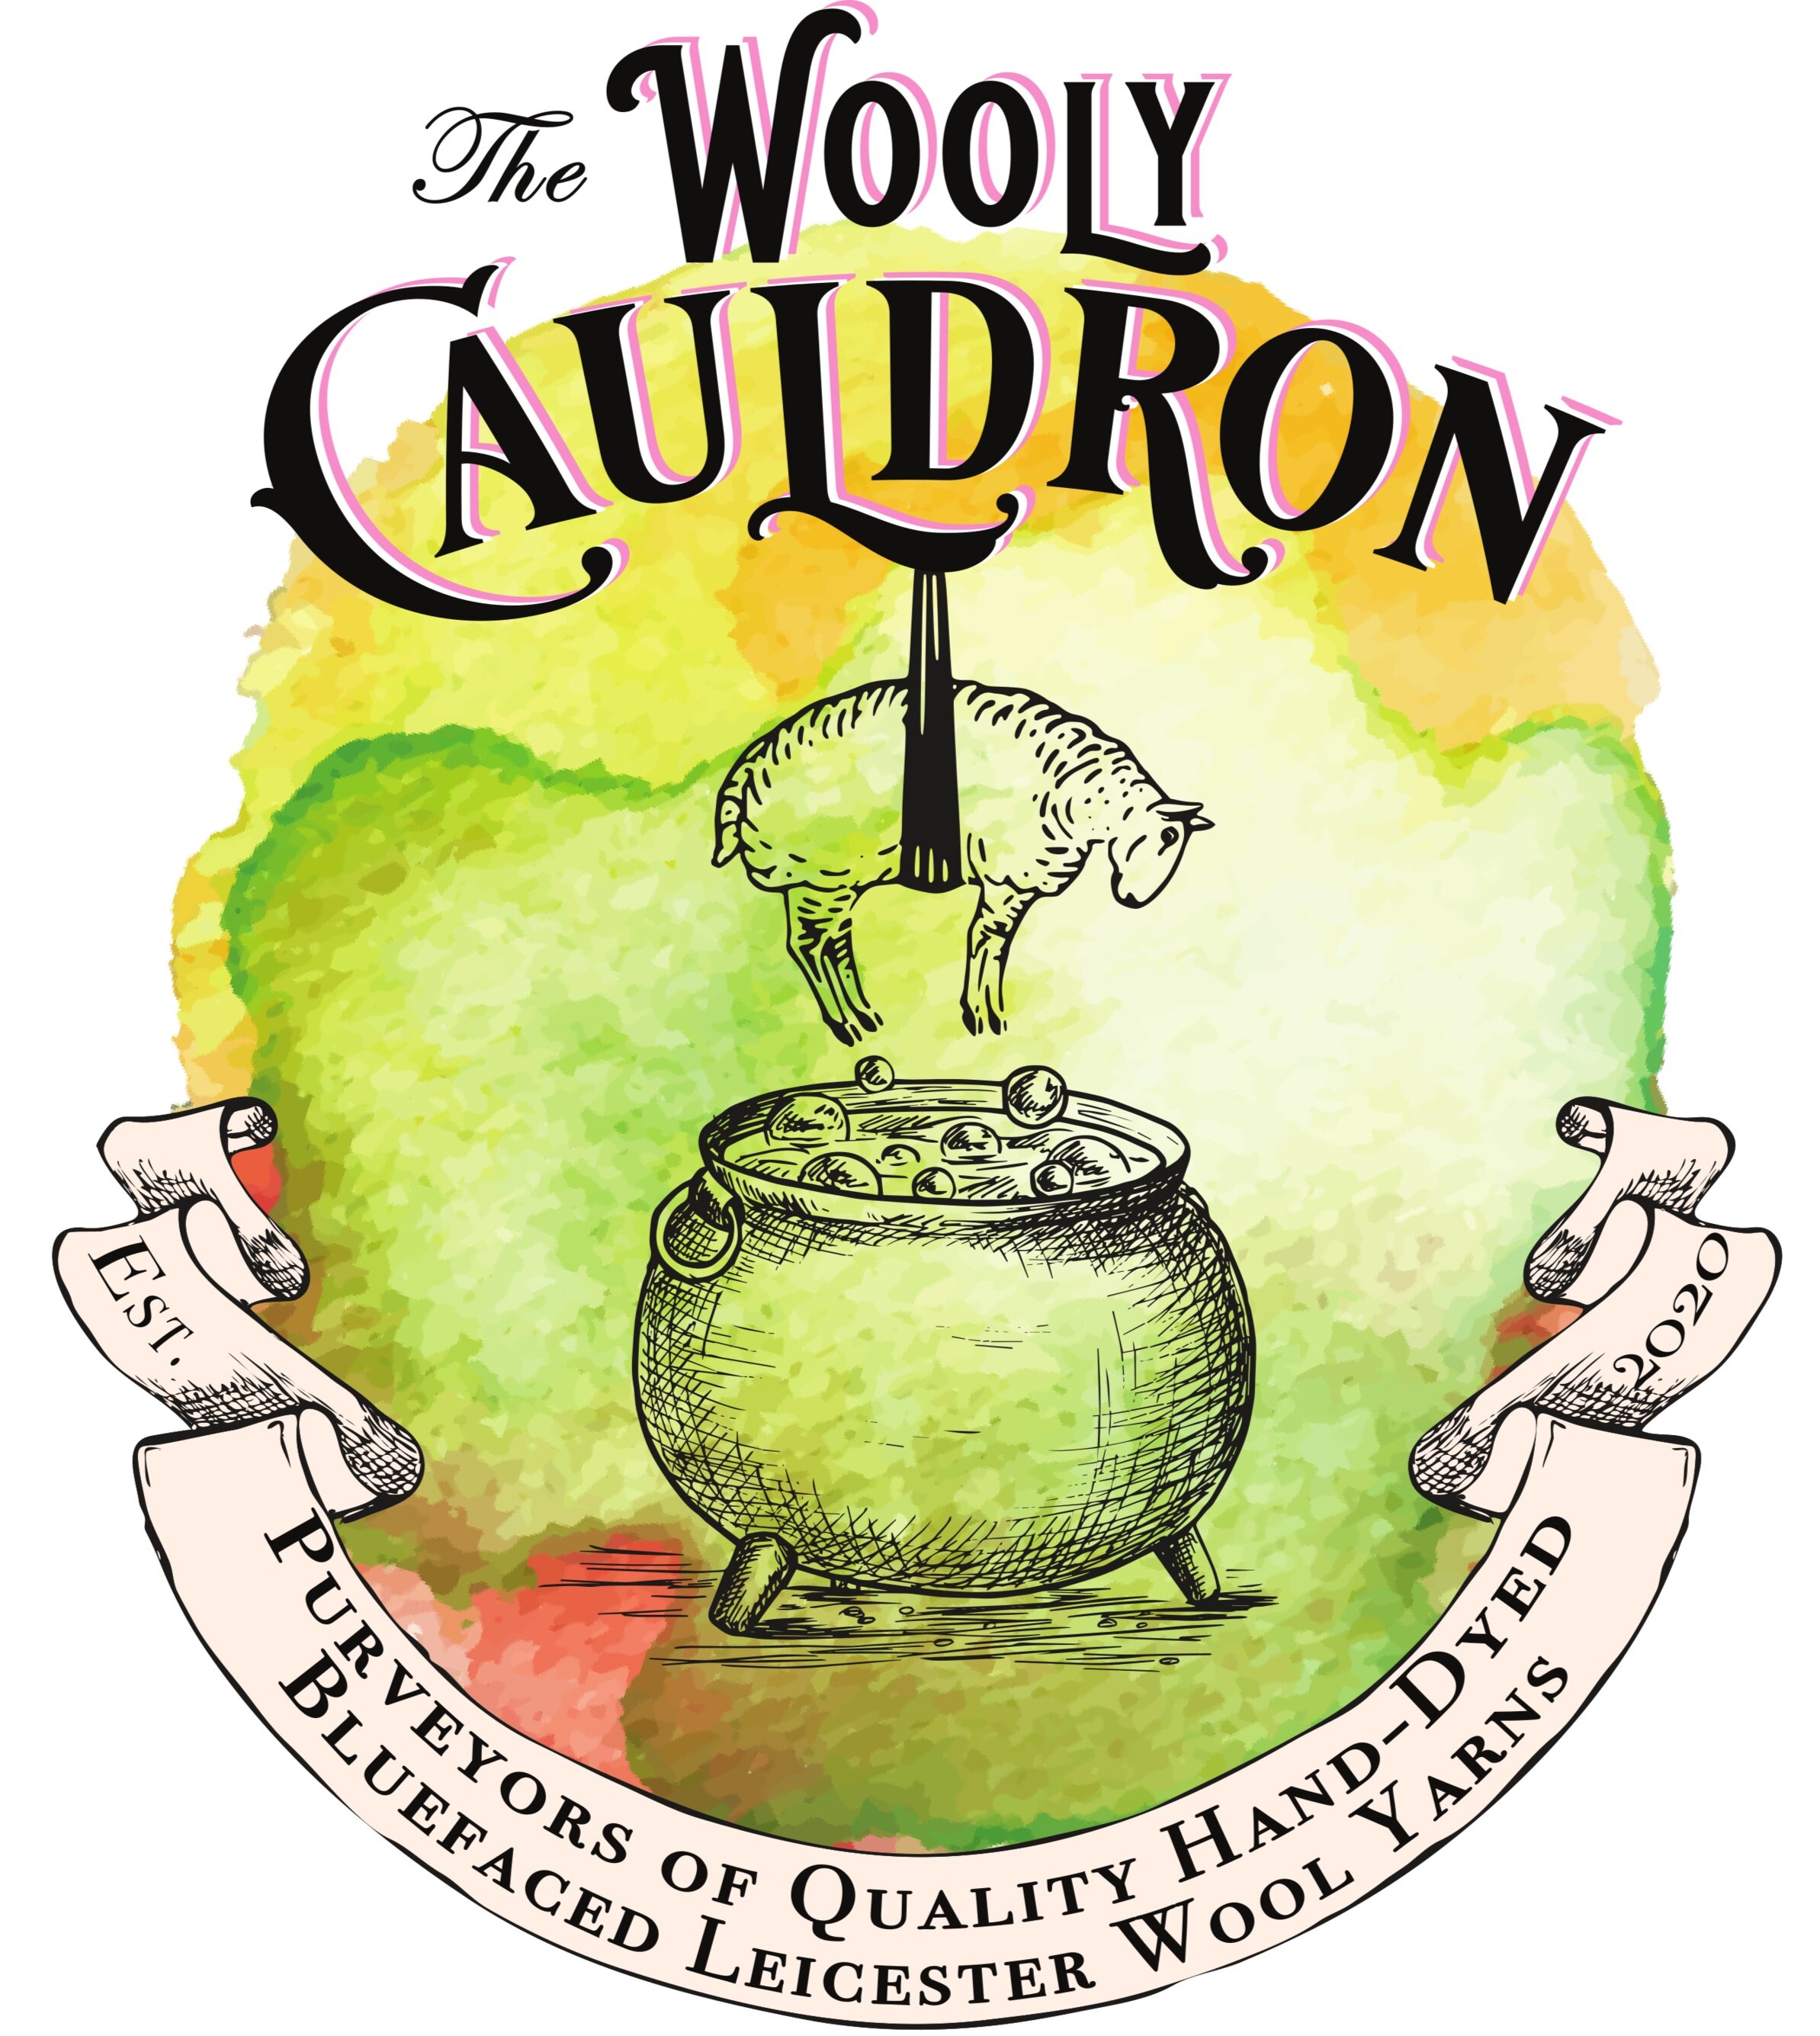 The Wooly Cauldron 